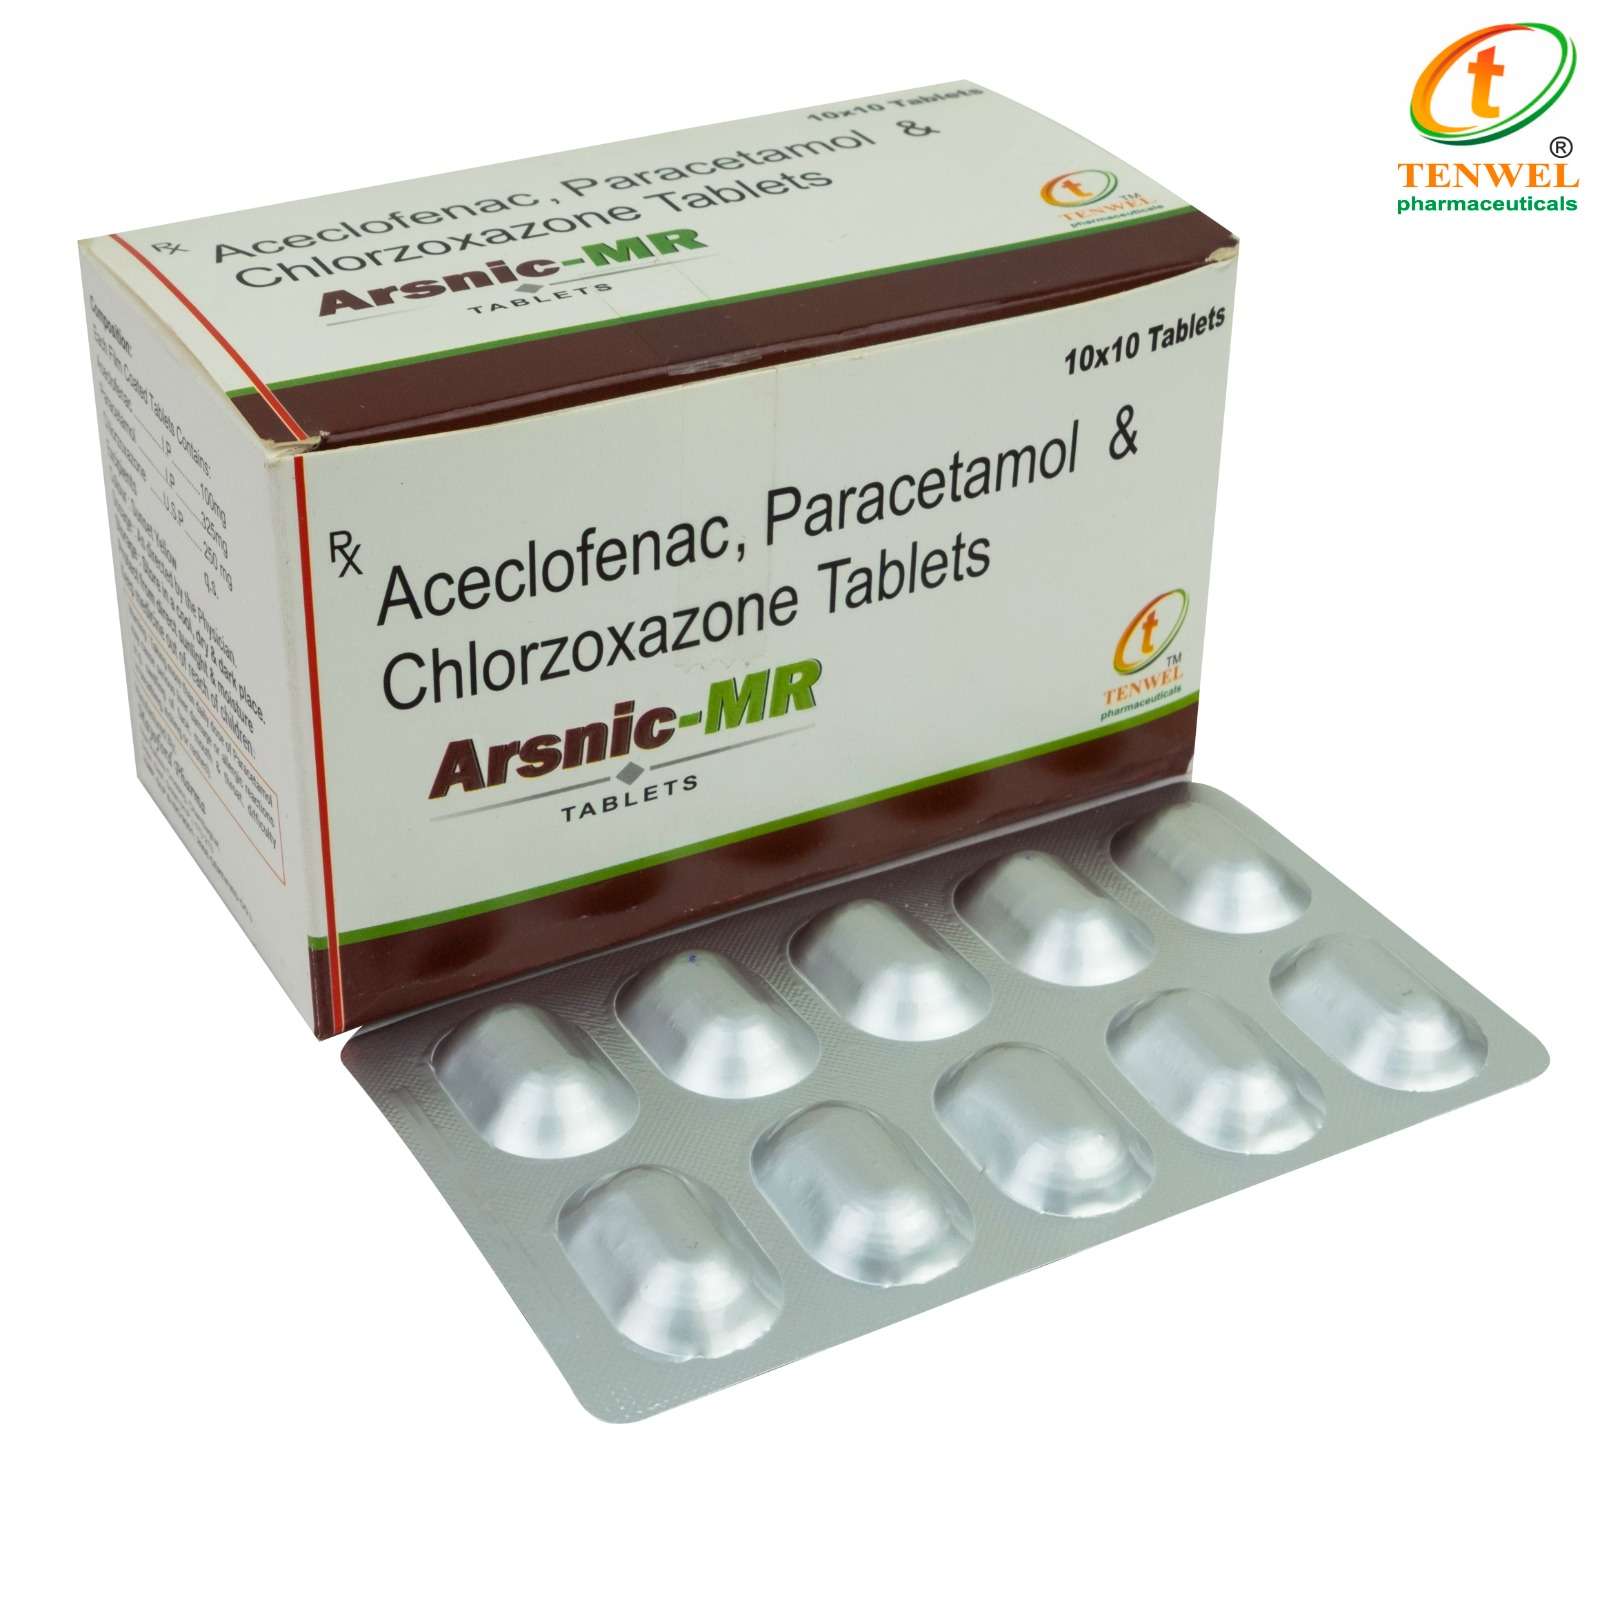 aceclofenac 100mg + paracetamol 325mg + chlorzoxazone 250mg